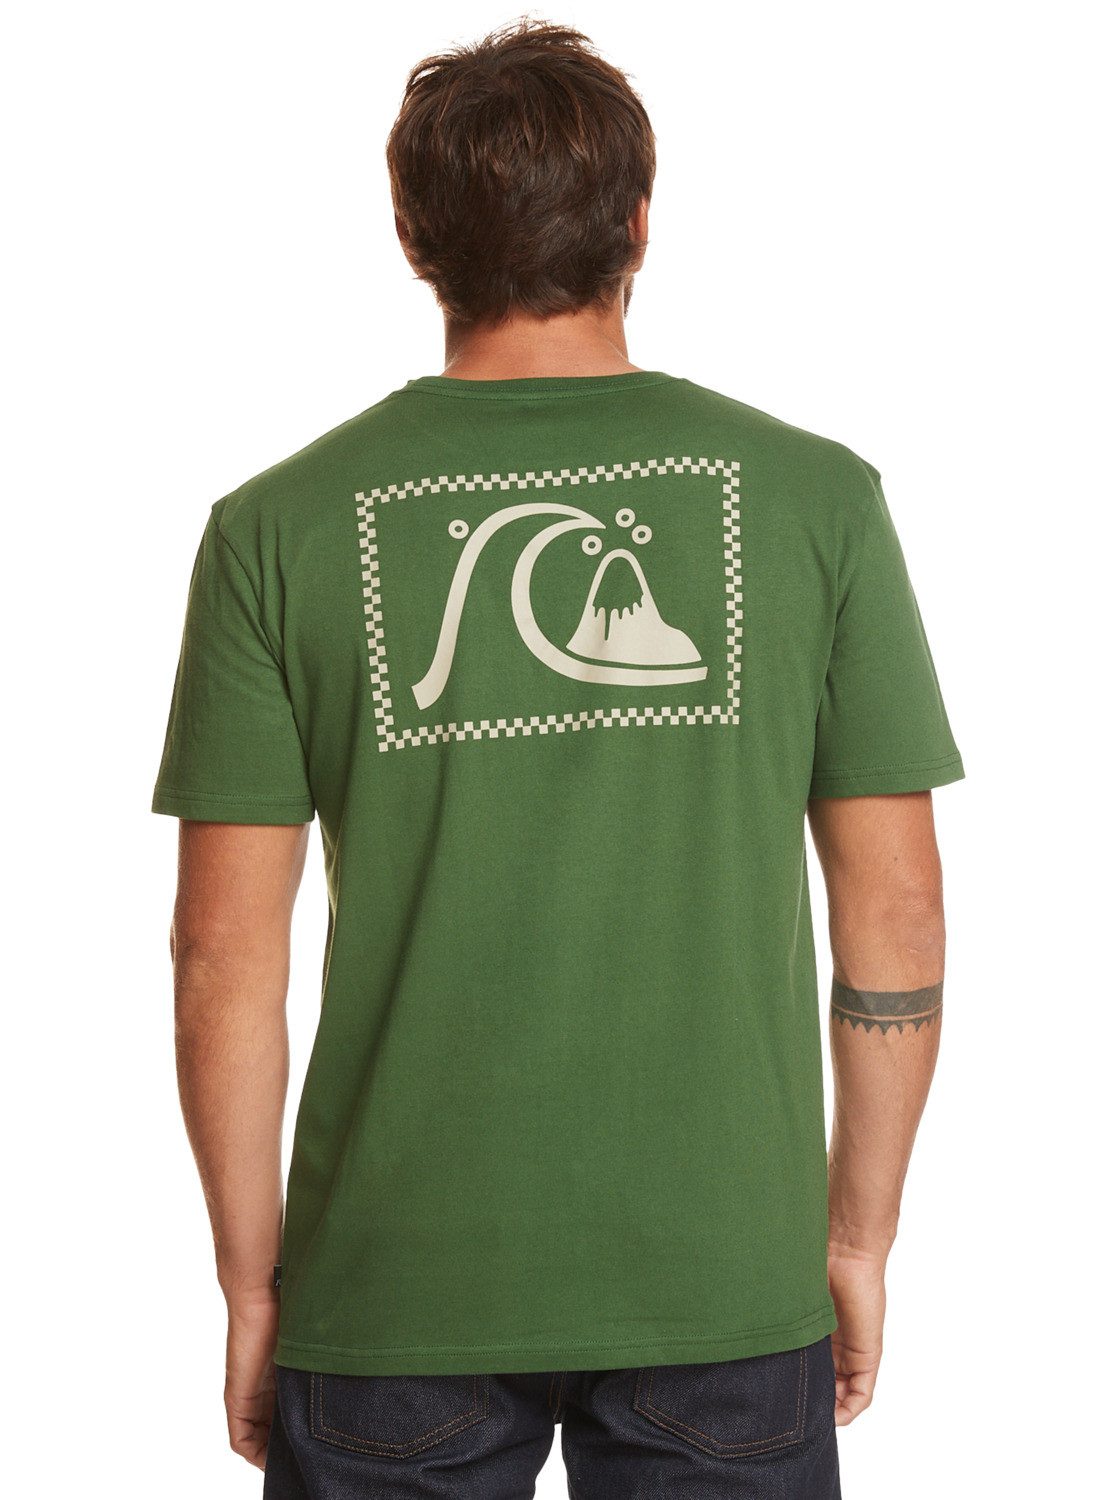 The Pastures Original Quiksilver Greener T-Shirt